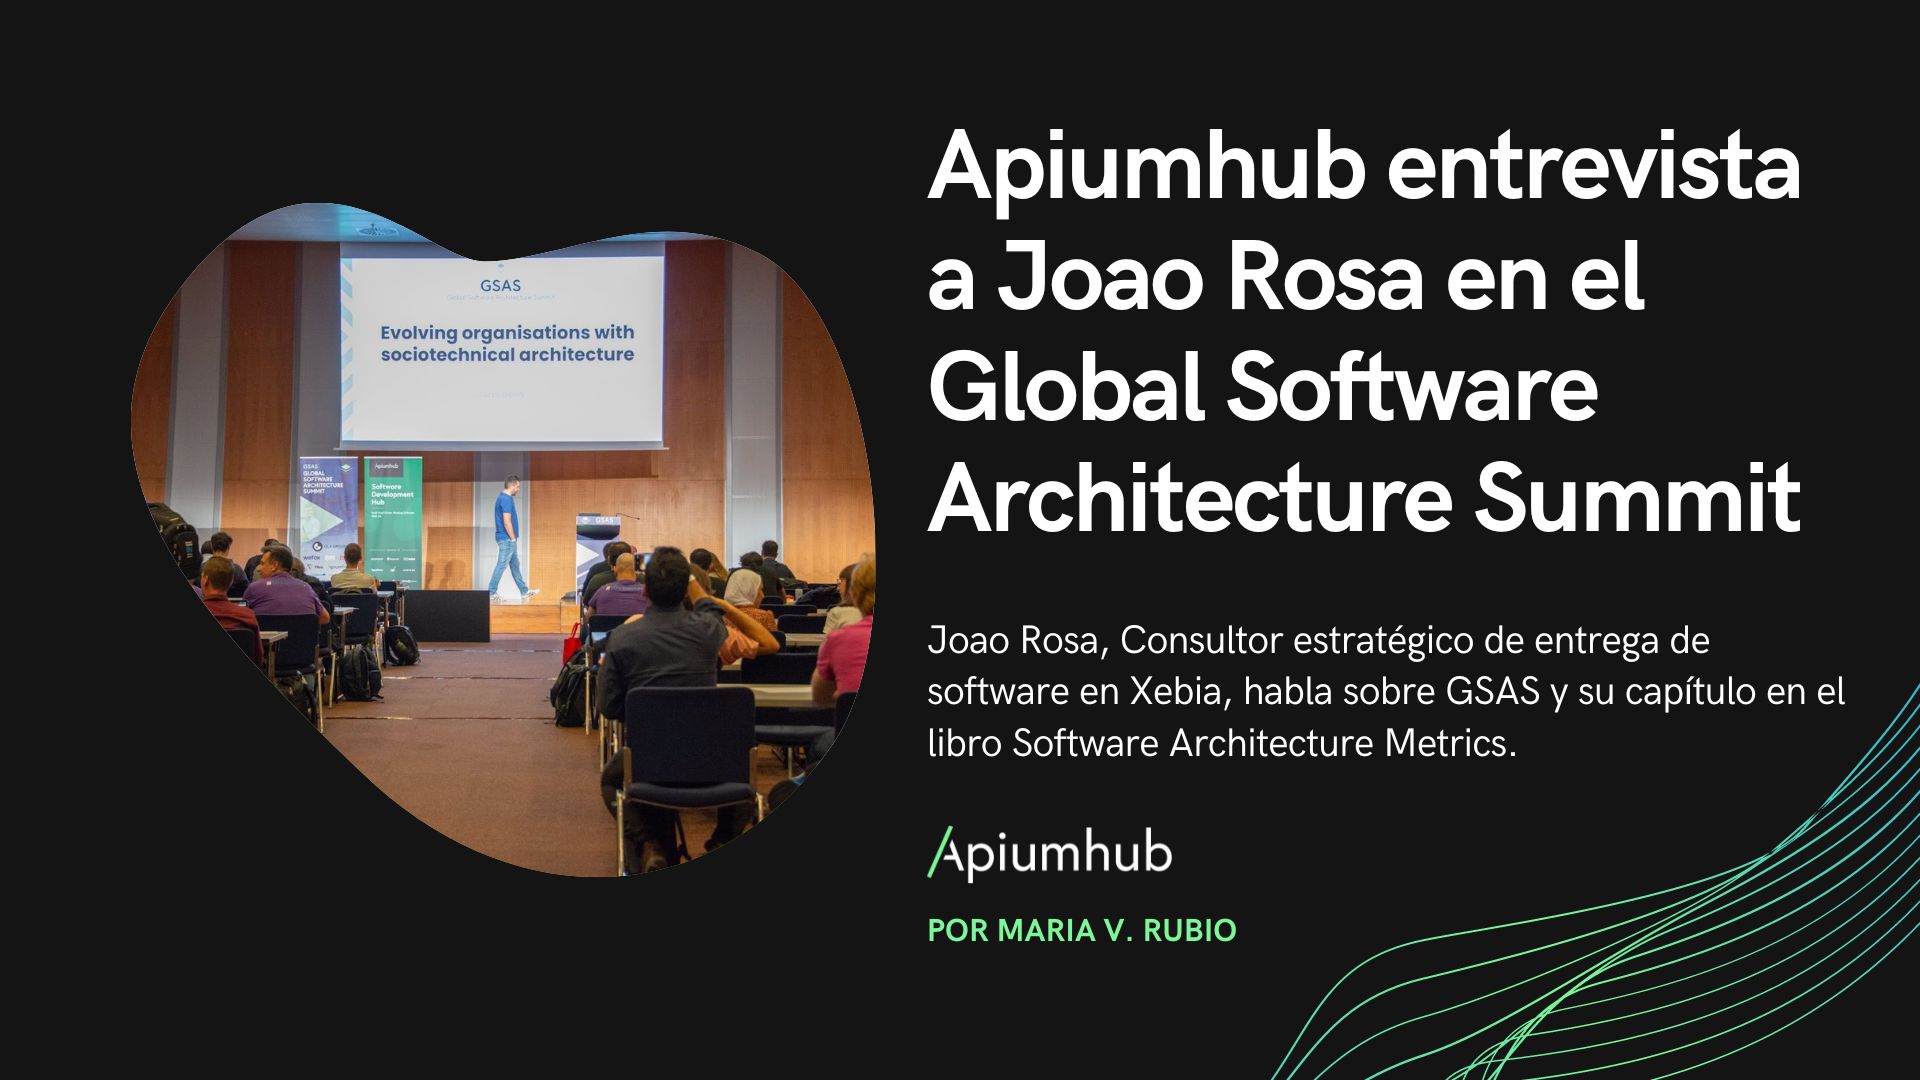 Apiumhub entrevista a Joao Rosa en el Global Software Architecture Summit